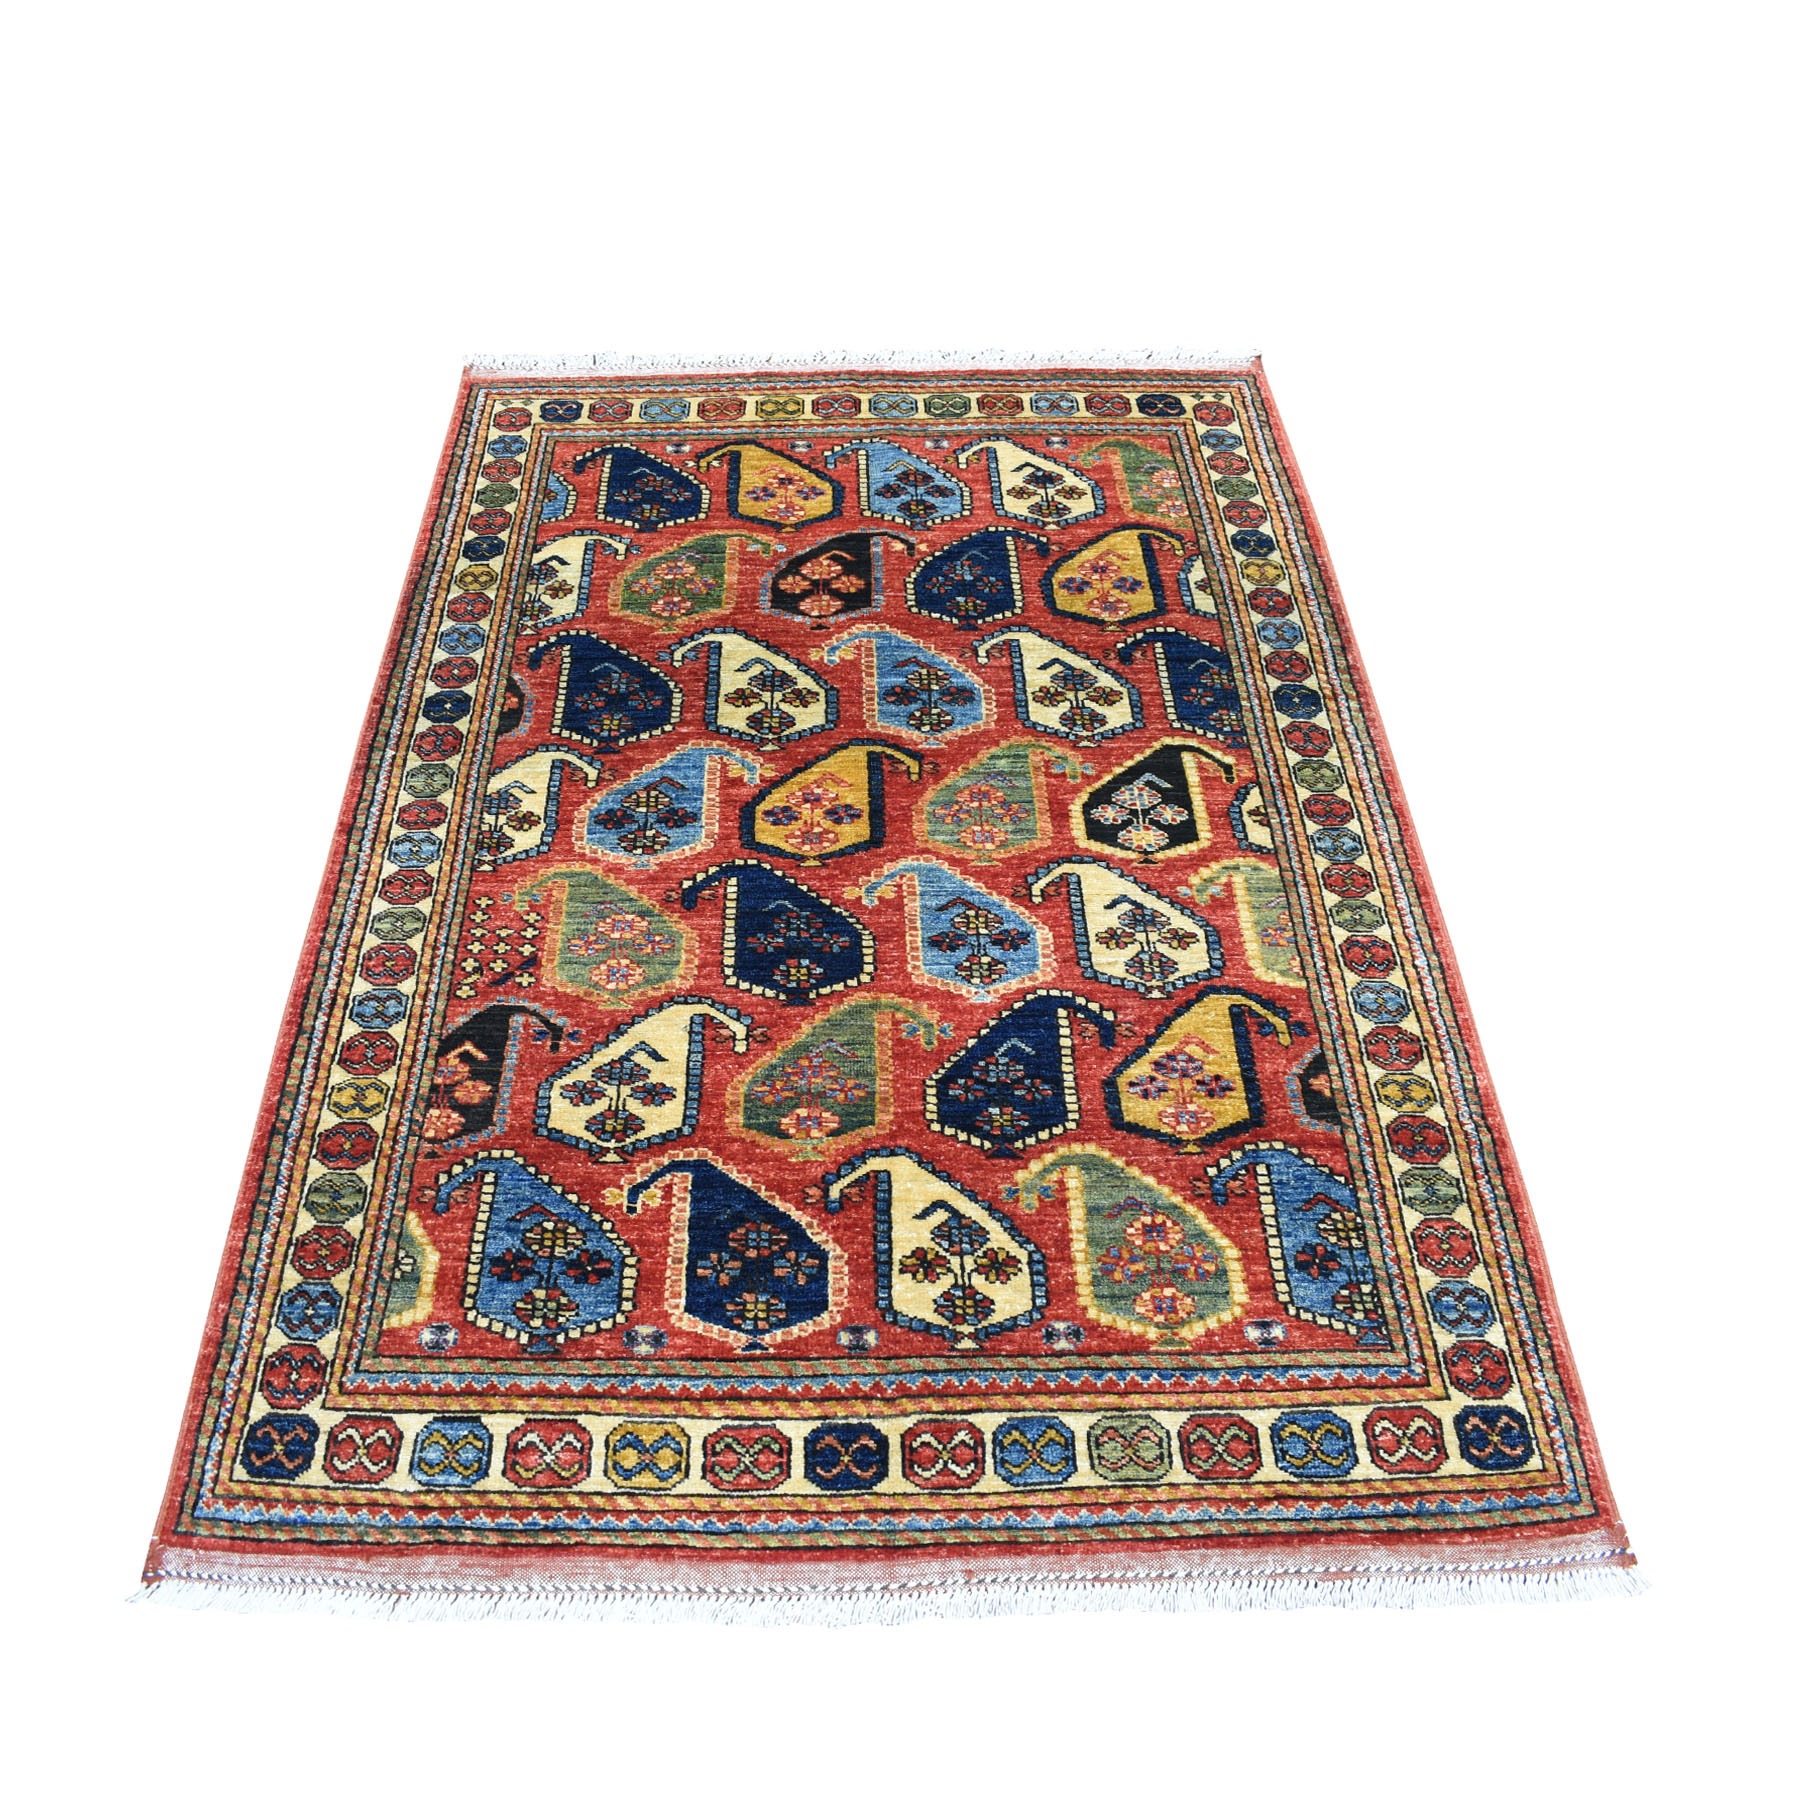 4'x5'10" Red Afghan Turkoman Ersari Paisley Design Hand Woven Pure Wool Oriental Rug 